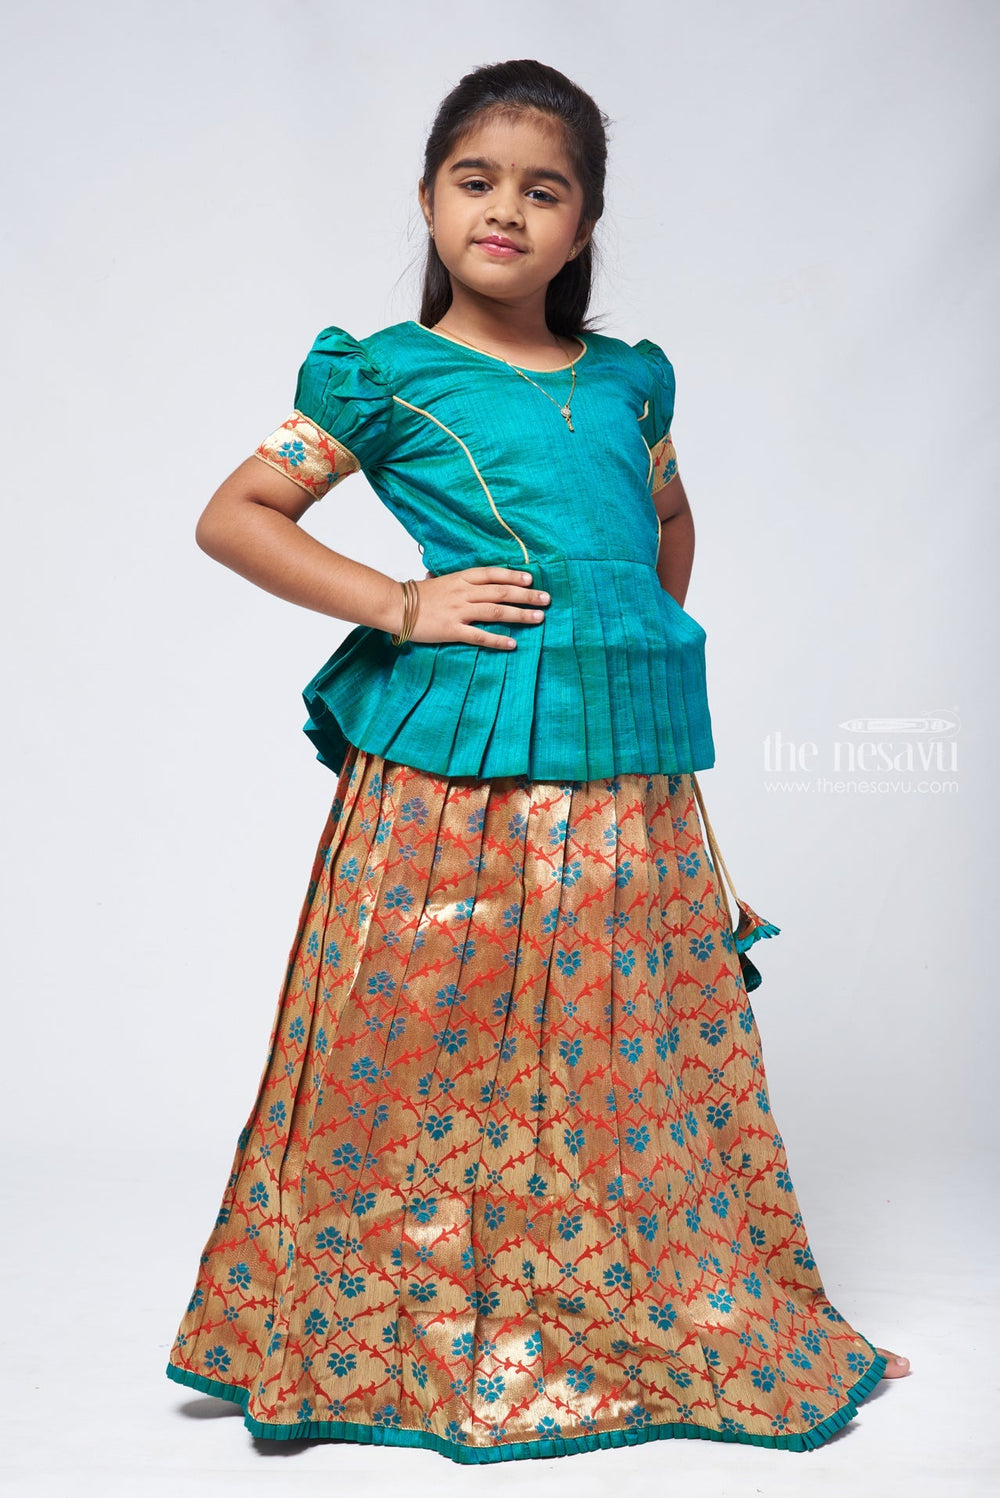 The Nesavu Pattu Pavadai Gorgeous Green Silk Peplum Blouse paired with Zari Floral Pattu Pavadai: Authentic South Indian Elegance Nesavu Pattu Pavadai with peplum blouse | Pattu Pavadai with Zari Border | The Nesavu